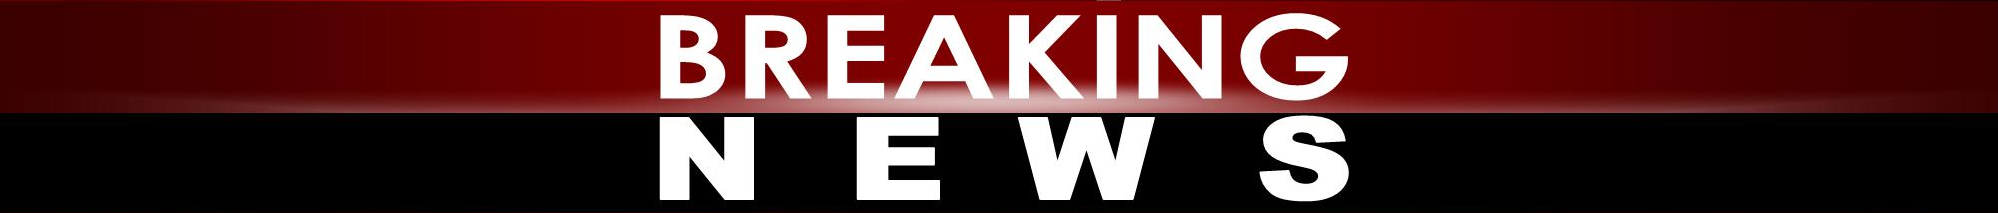 breaking-news - 20 Years-IdeaTV News For Breaking News, Hindi News, live .....